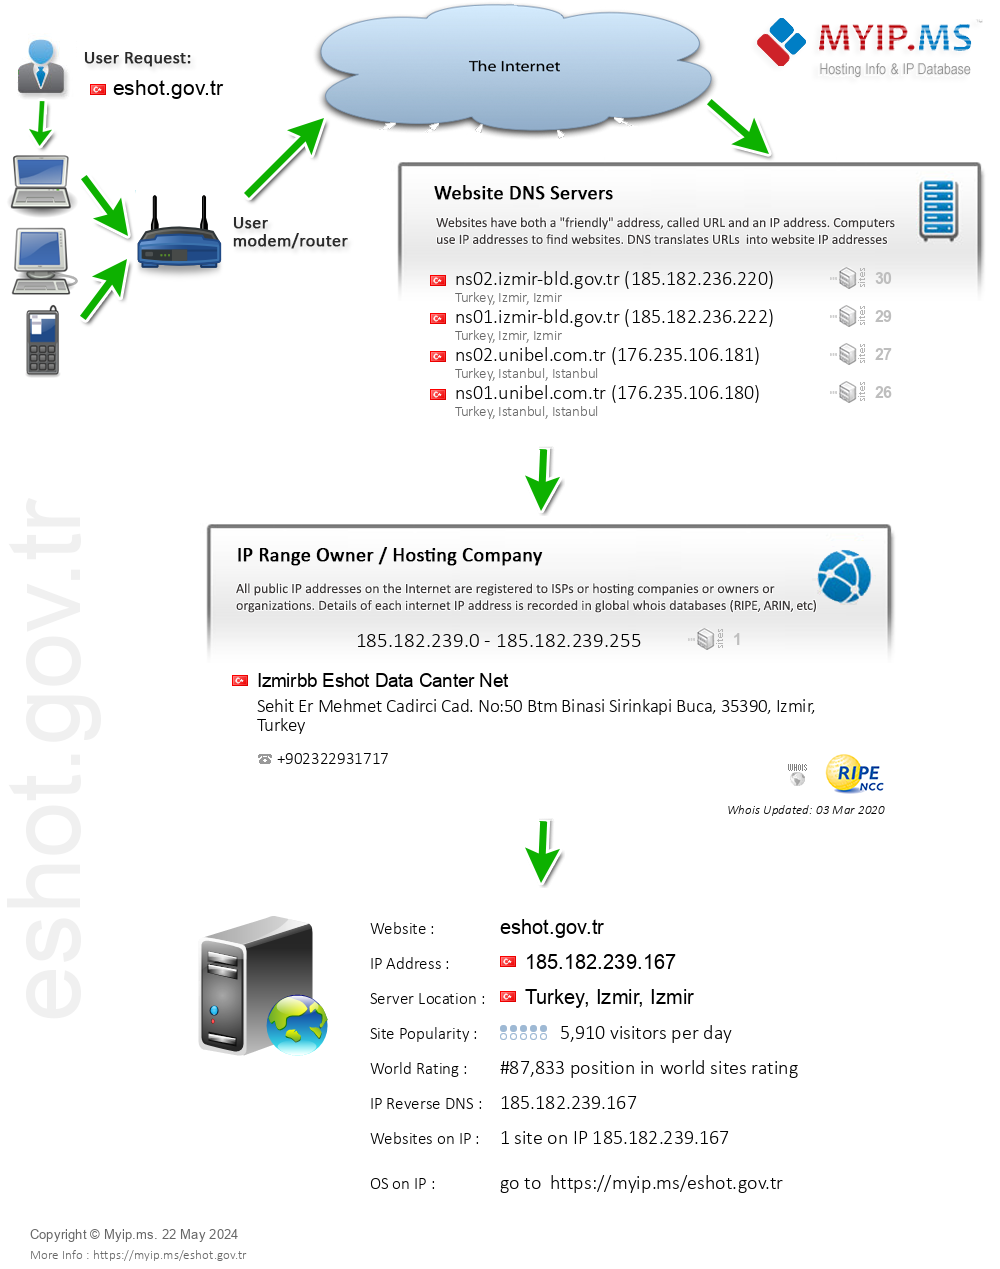 Eshot.gov.tr - Website Hosting Visual IP Diagram